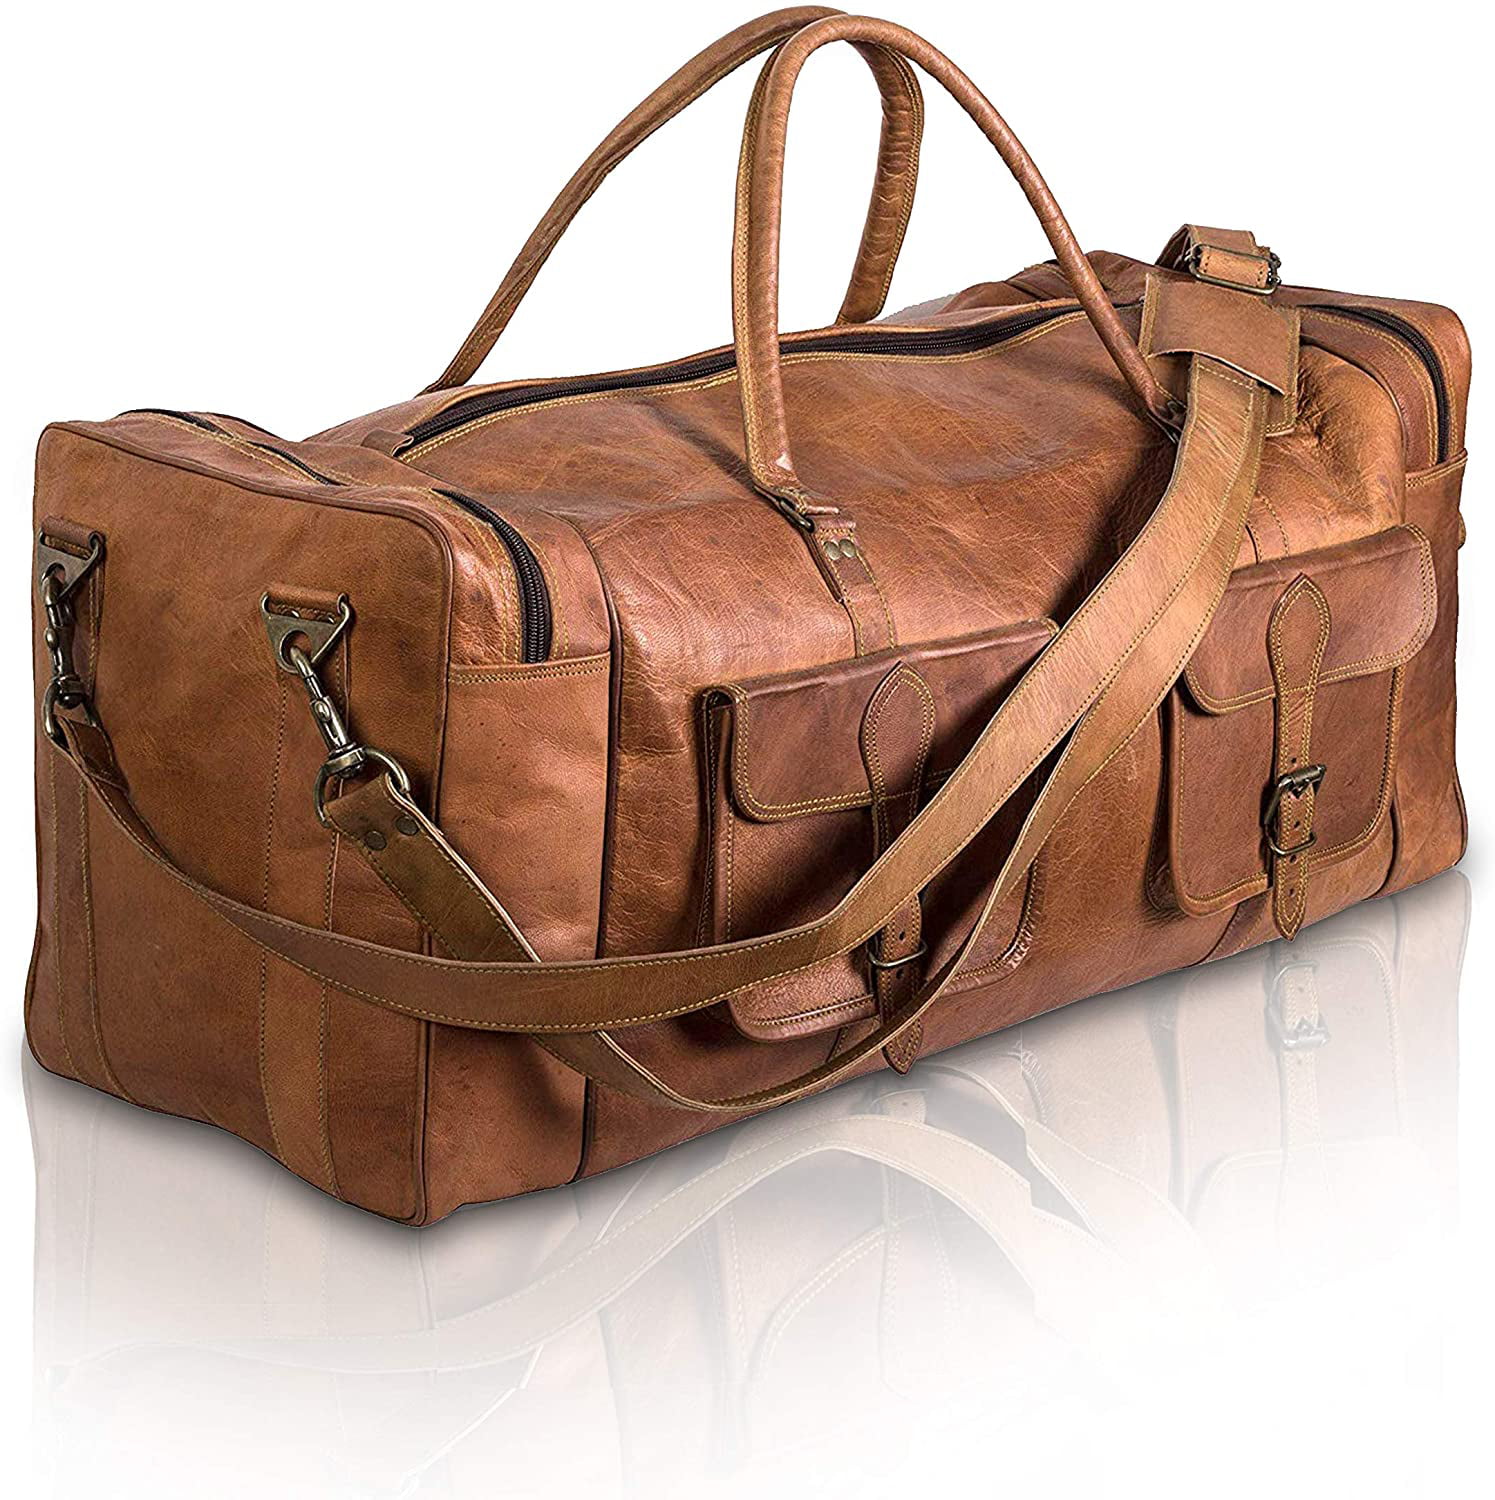 Men's Leather Handmade Vintage Duffle Luggage Weekend Gym Overnight Travel Bag